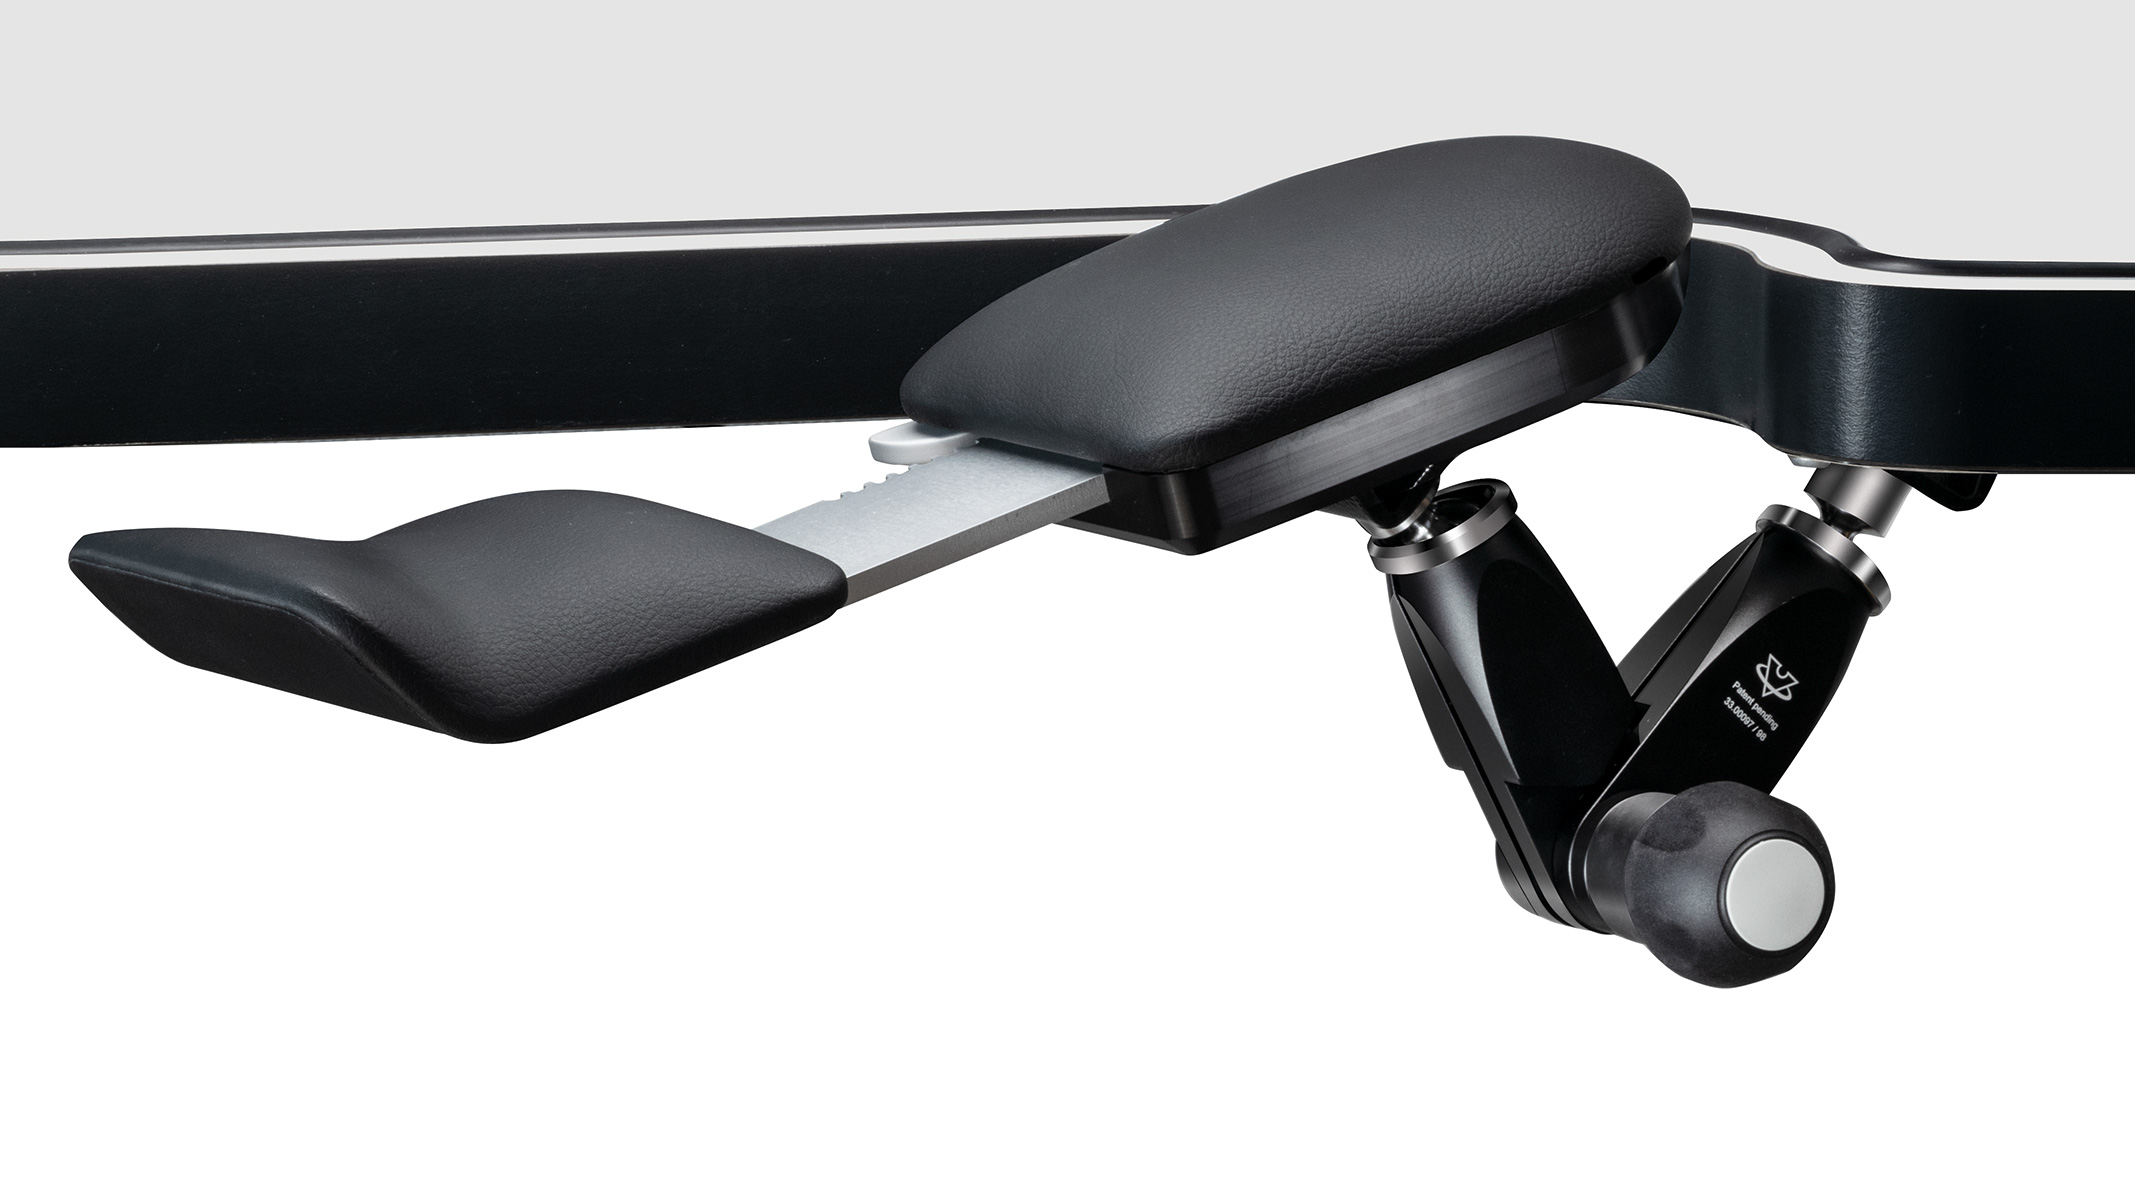 VOH Armrests, length dynamic from 280 - 350 mm, 3D adjustable, black, special equipment for Ergolift
Evolution (Ergo Suite, swiss patent)